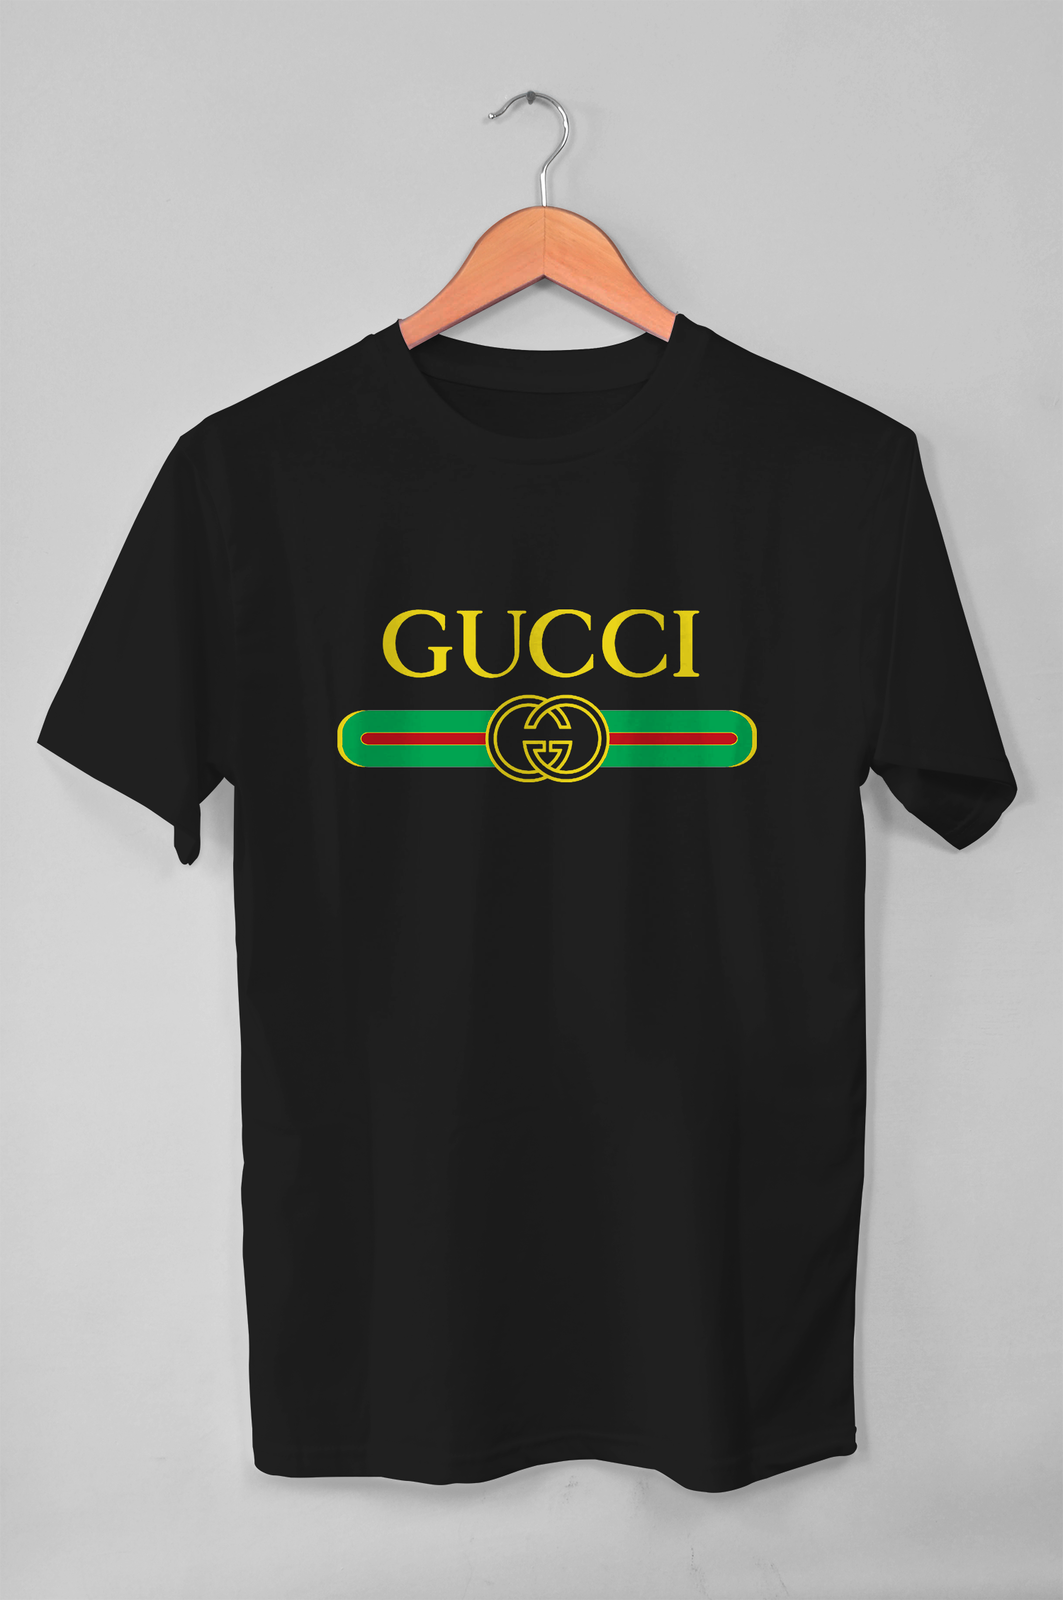 Stripe Gucci Shirt Band Fashion Famous Tee Tshirt Unisex Men Women S-3XL - £15.26 GBP - £19.28 GBP